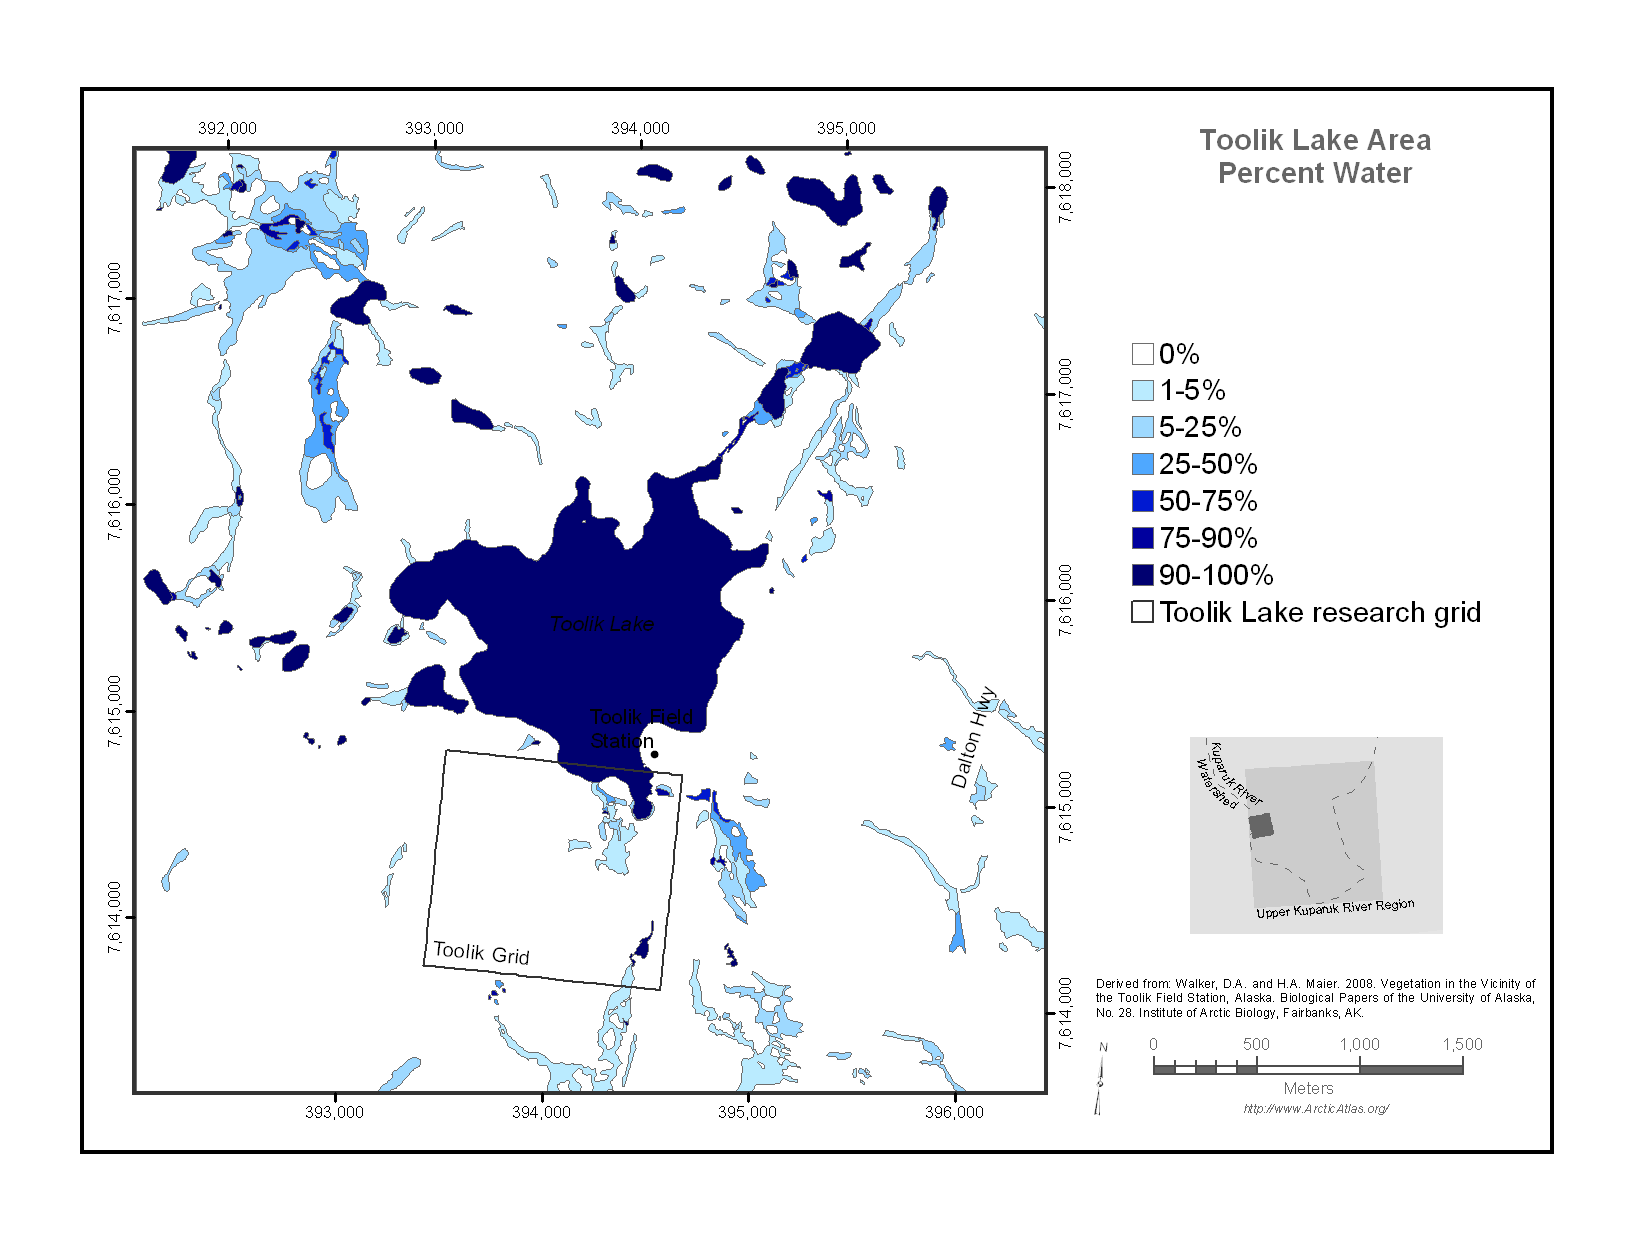 The Toolik Lake Area Percent Water Map